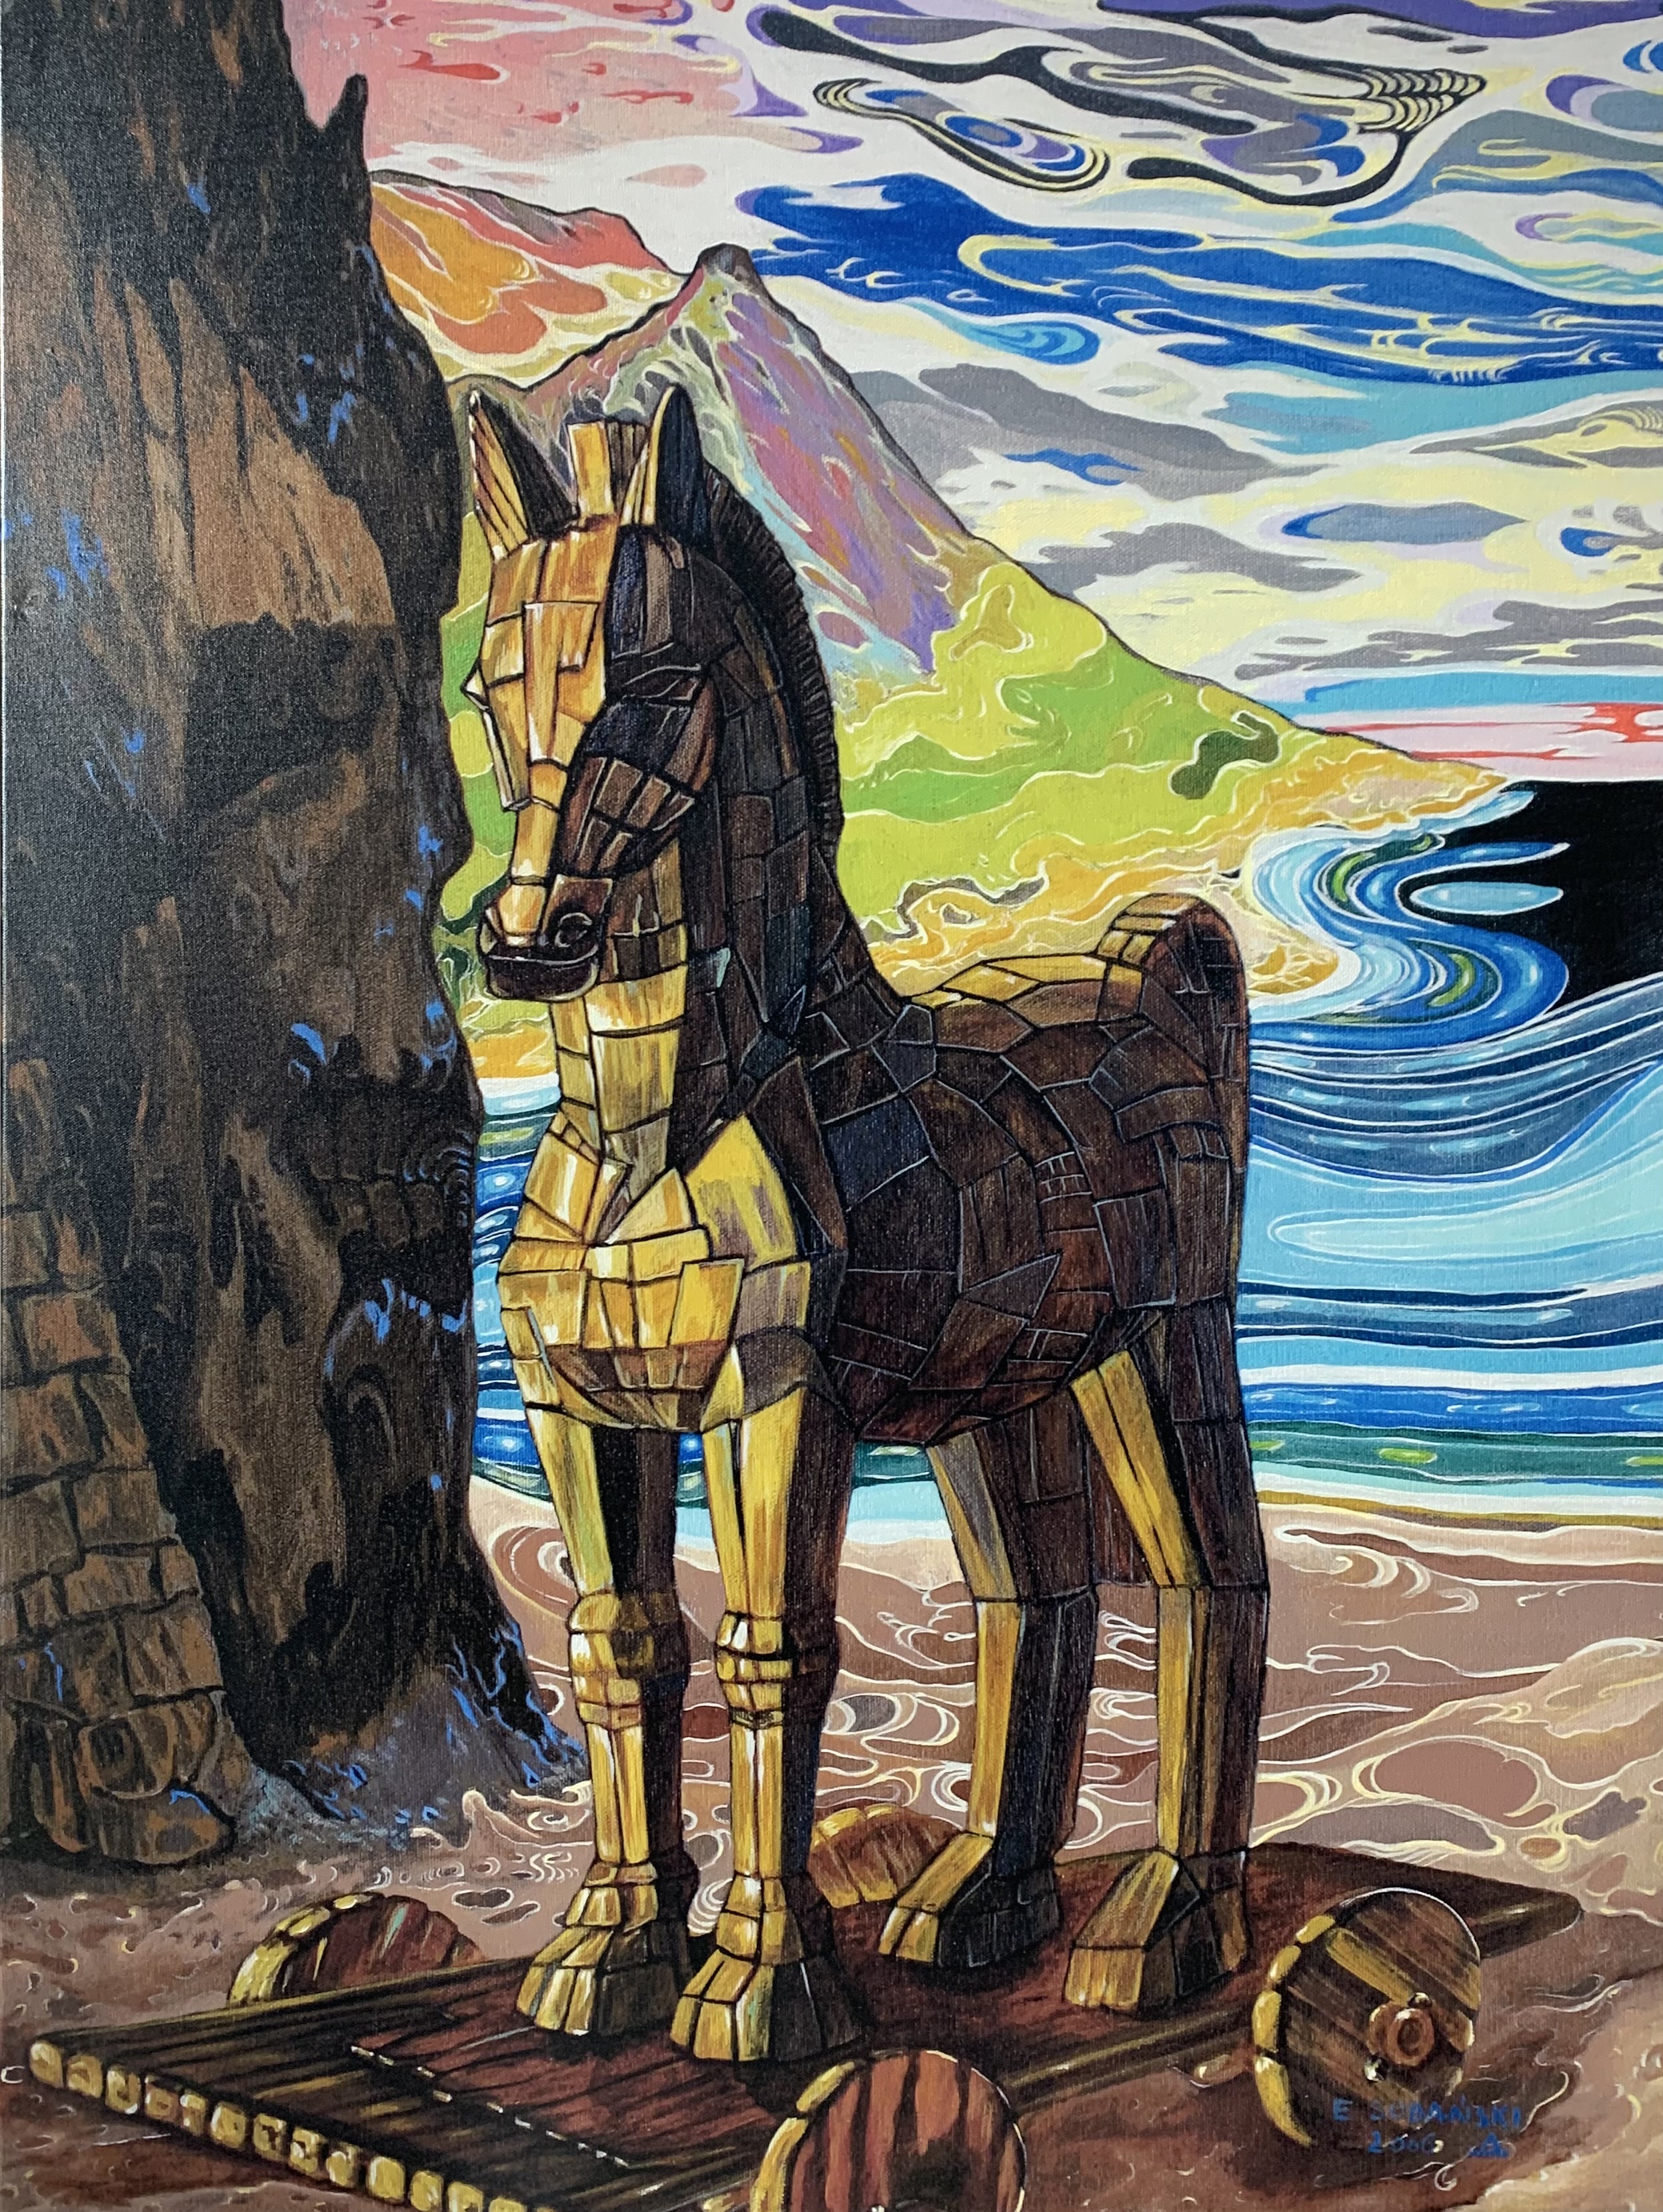 TROJAN'S HORSE (45" X 60" - CANVAS PRINT)